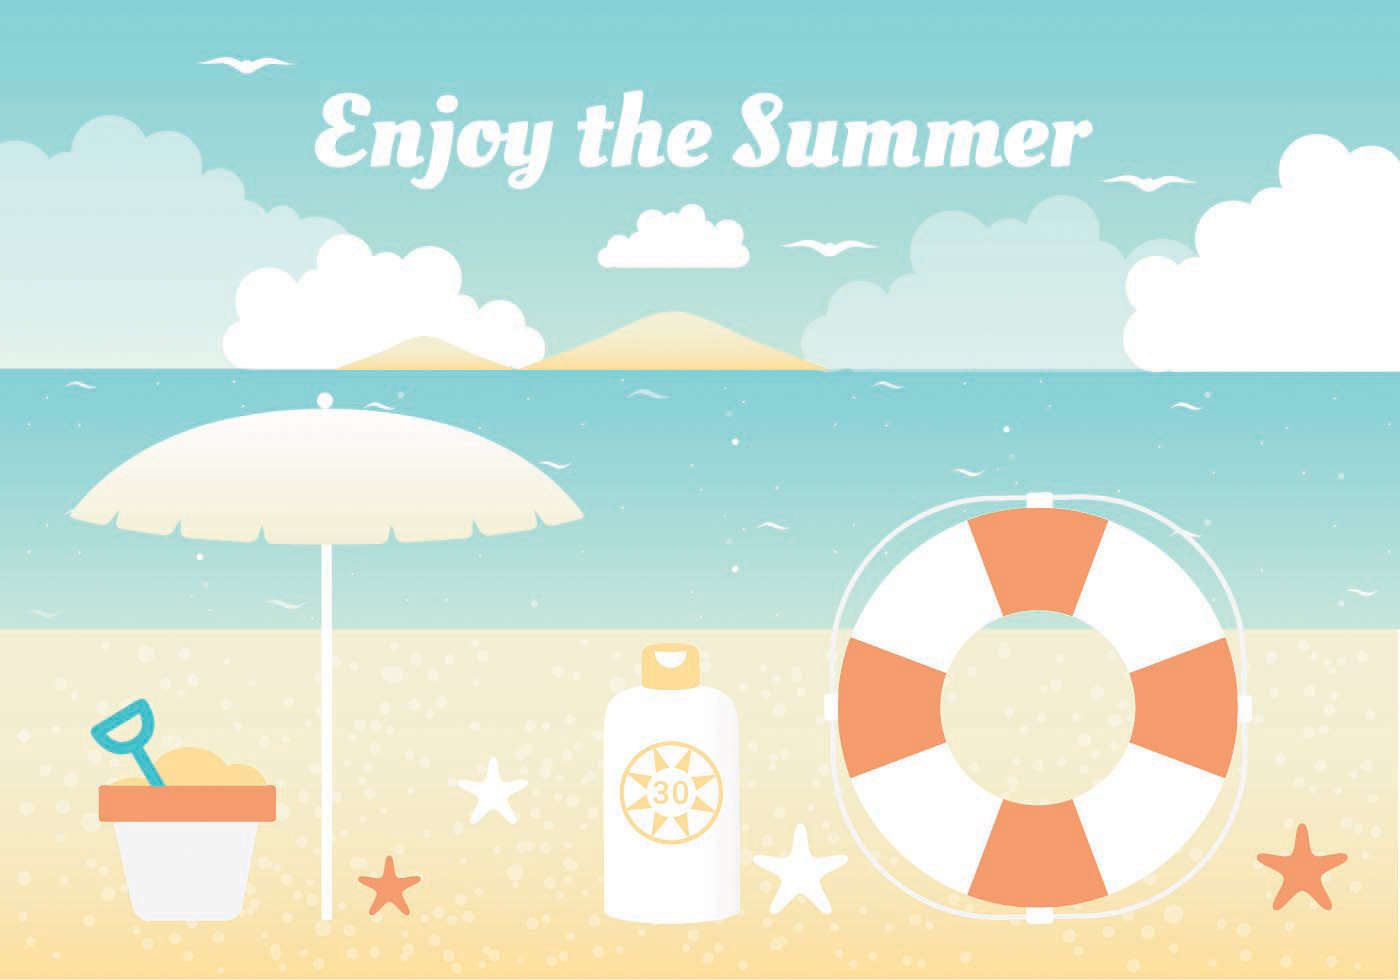 Download Free Summer Vacation Vector Elements 148319 Vector Art at ...